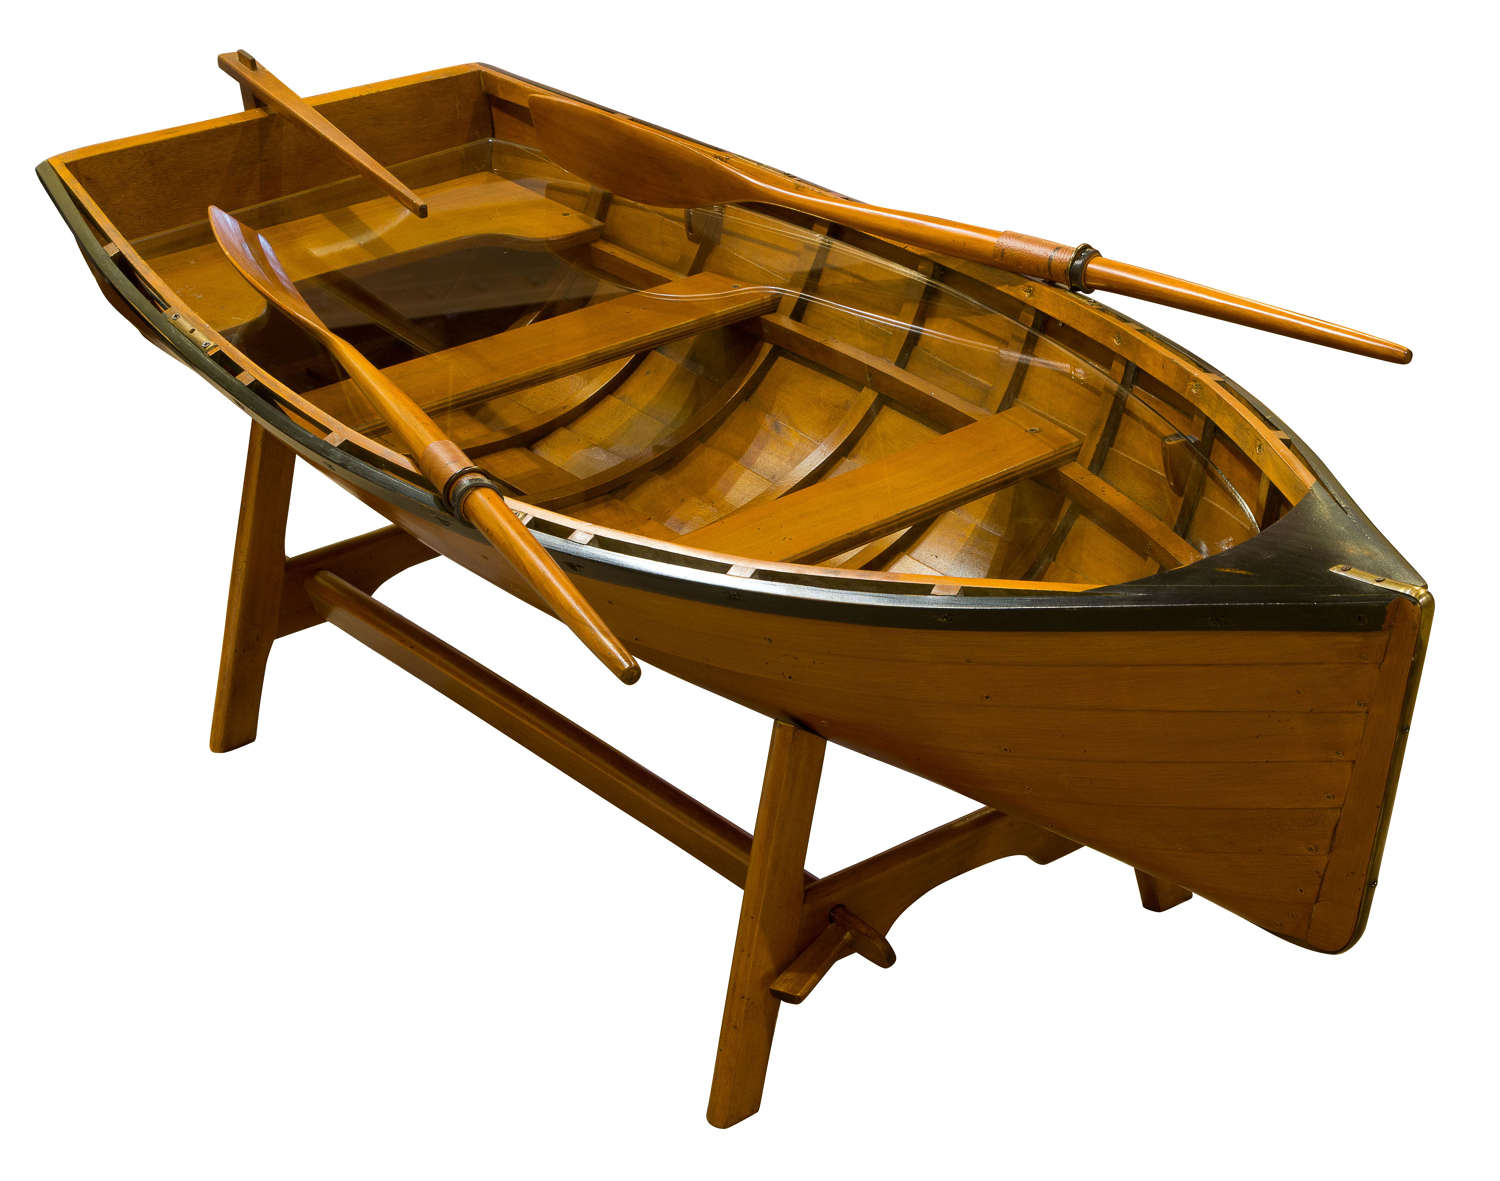 Model boat coffee table